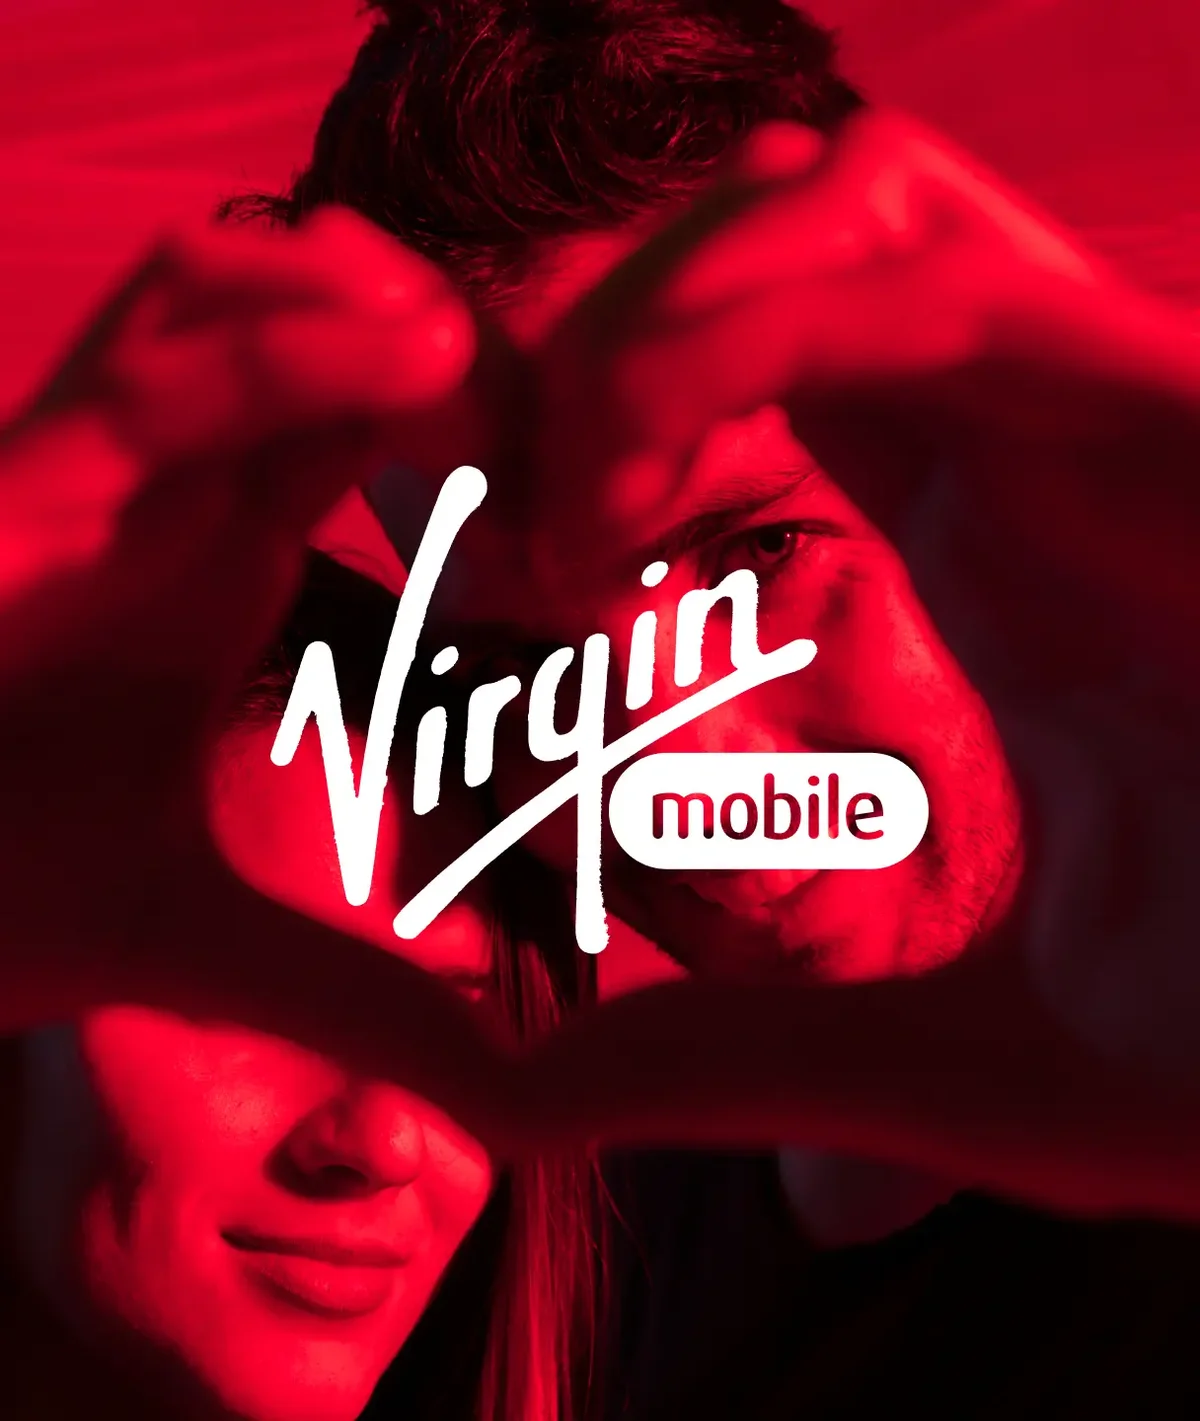 Mobile application for Virgin Mobile, global communications company